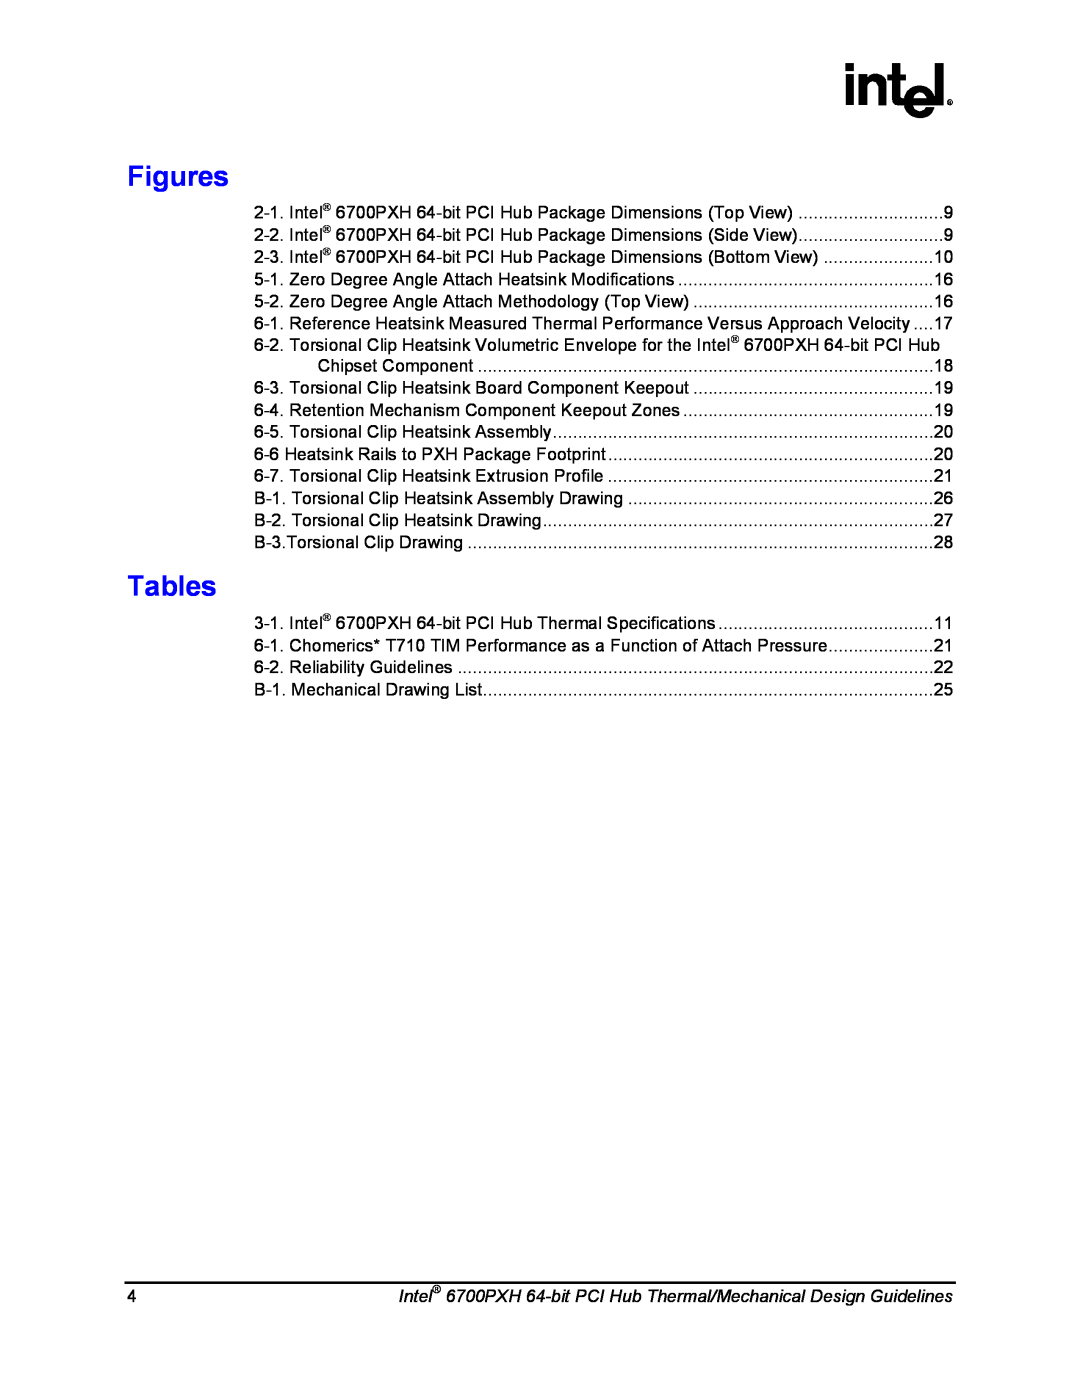 Intel manual Figures, Tables, Intel 6700PXH 64-bit PCI Hub Thermal/Mechanical Design Guidelines 